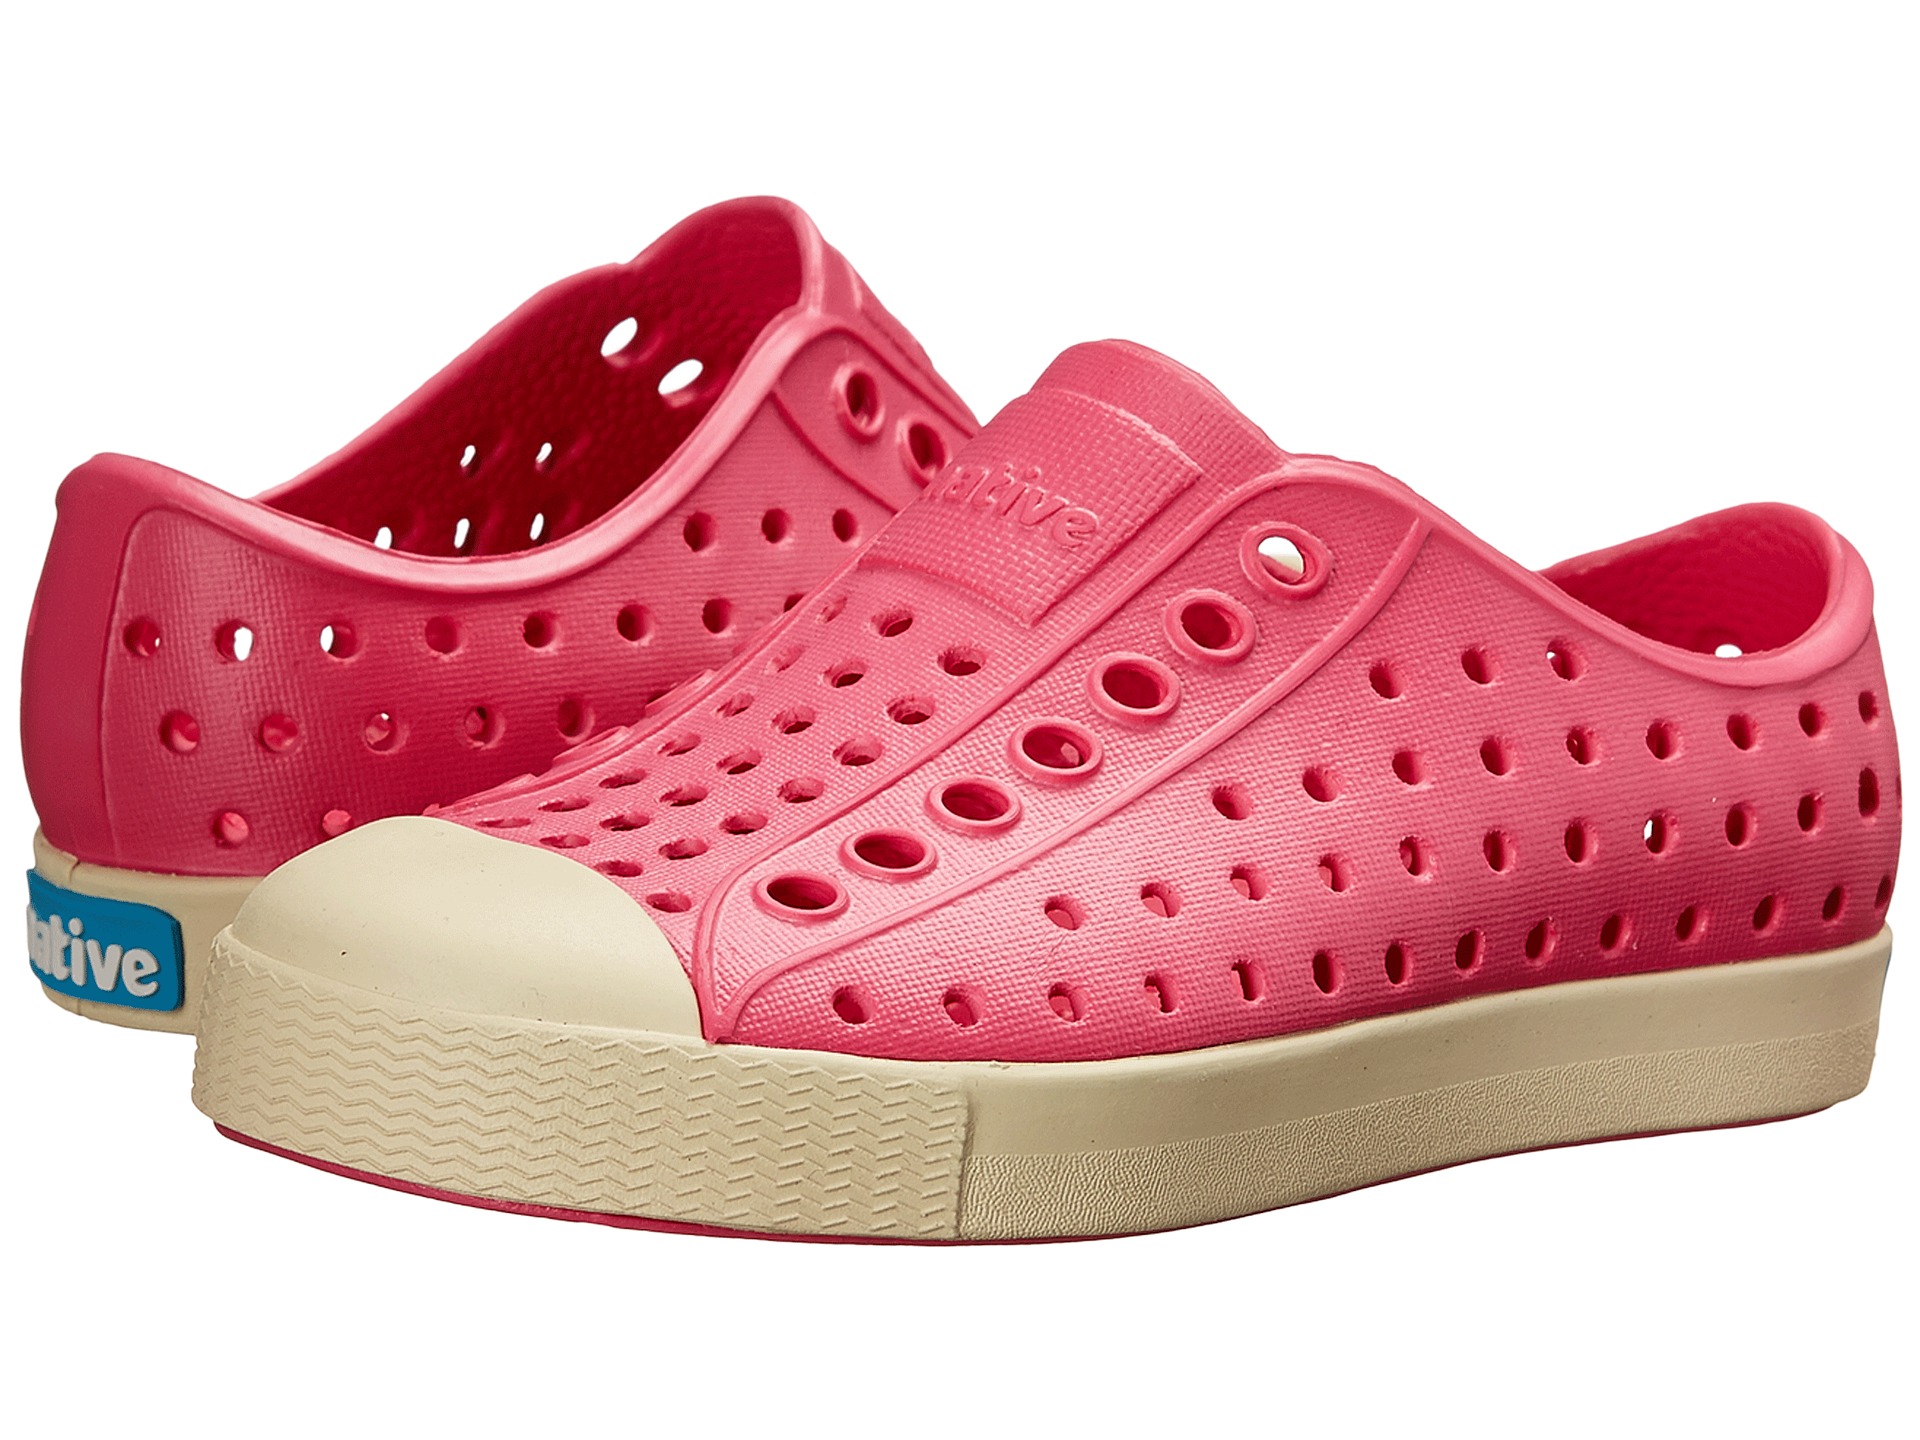 Best Sandals For Plantar Fasciitis: Zappos Kids Sneakers